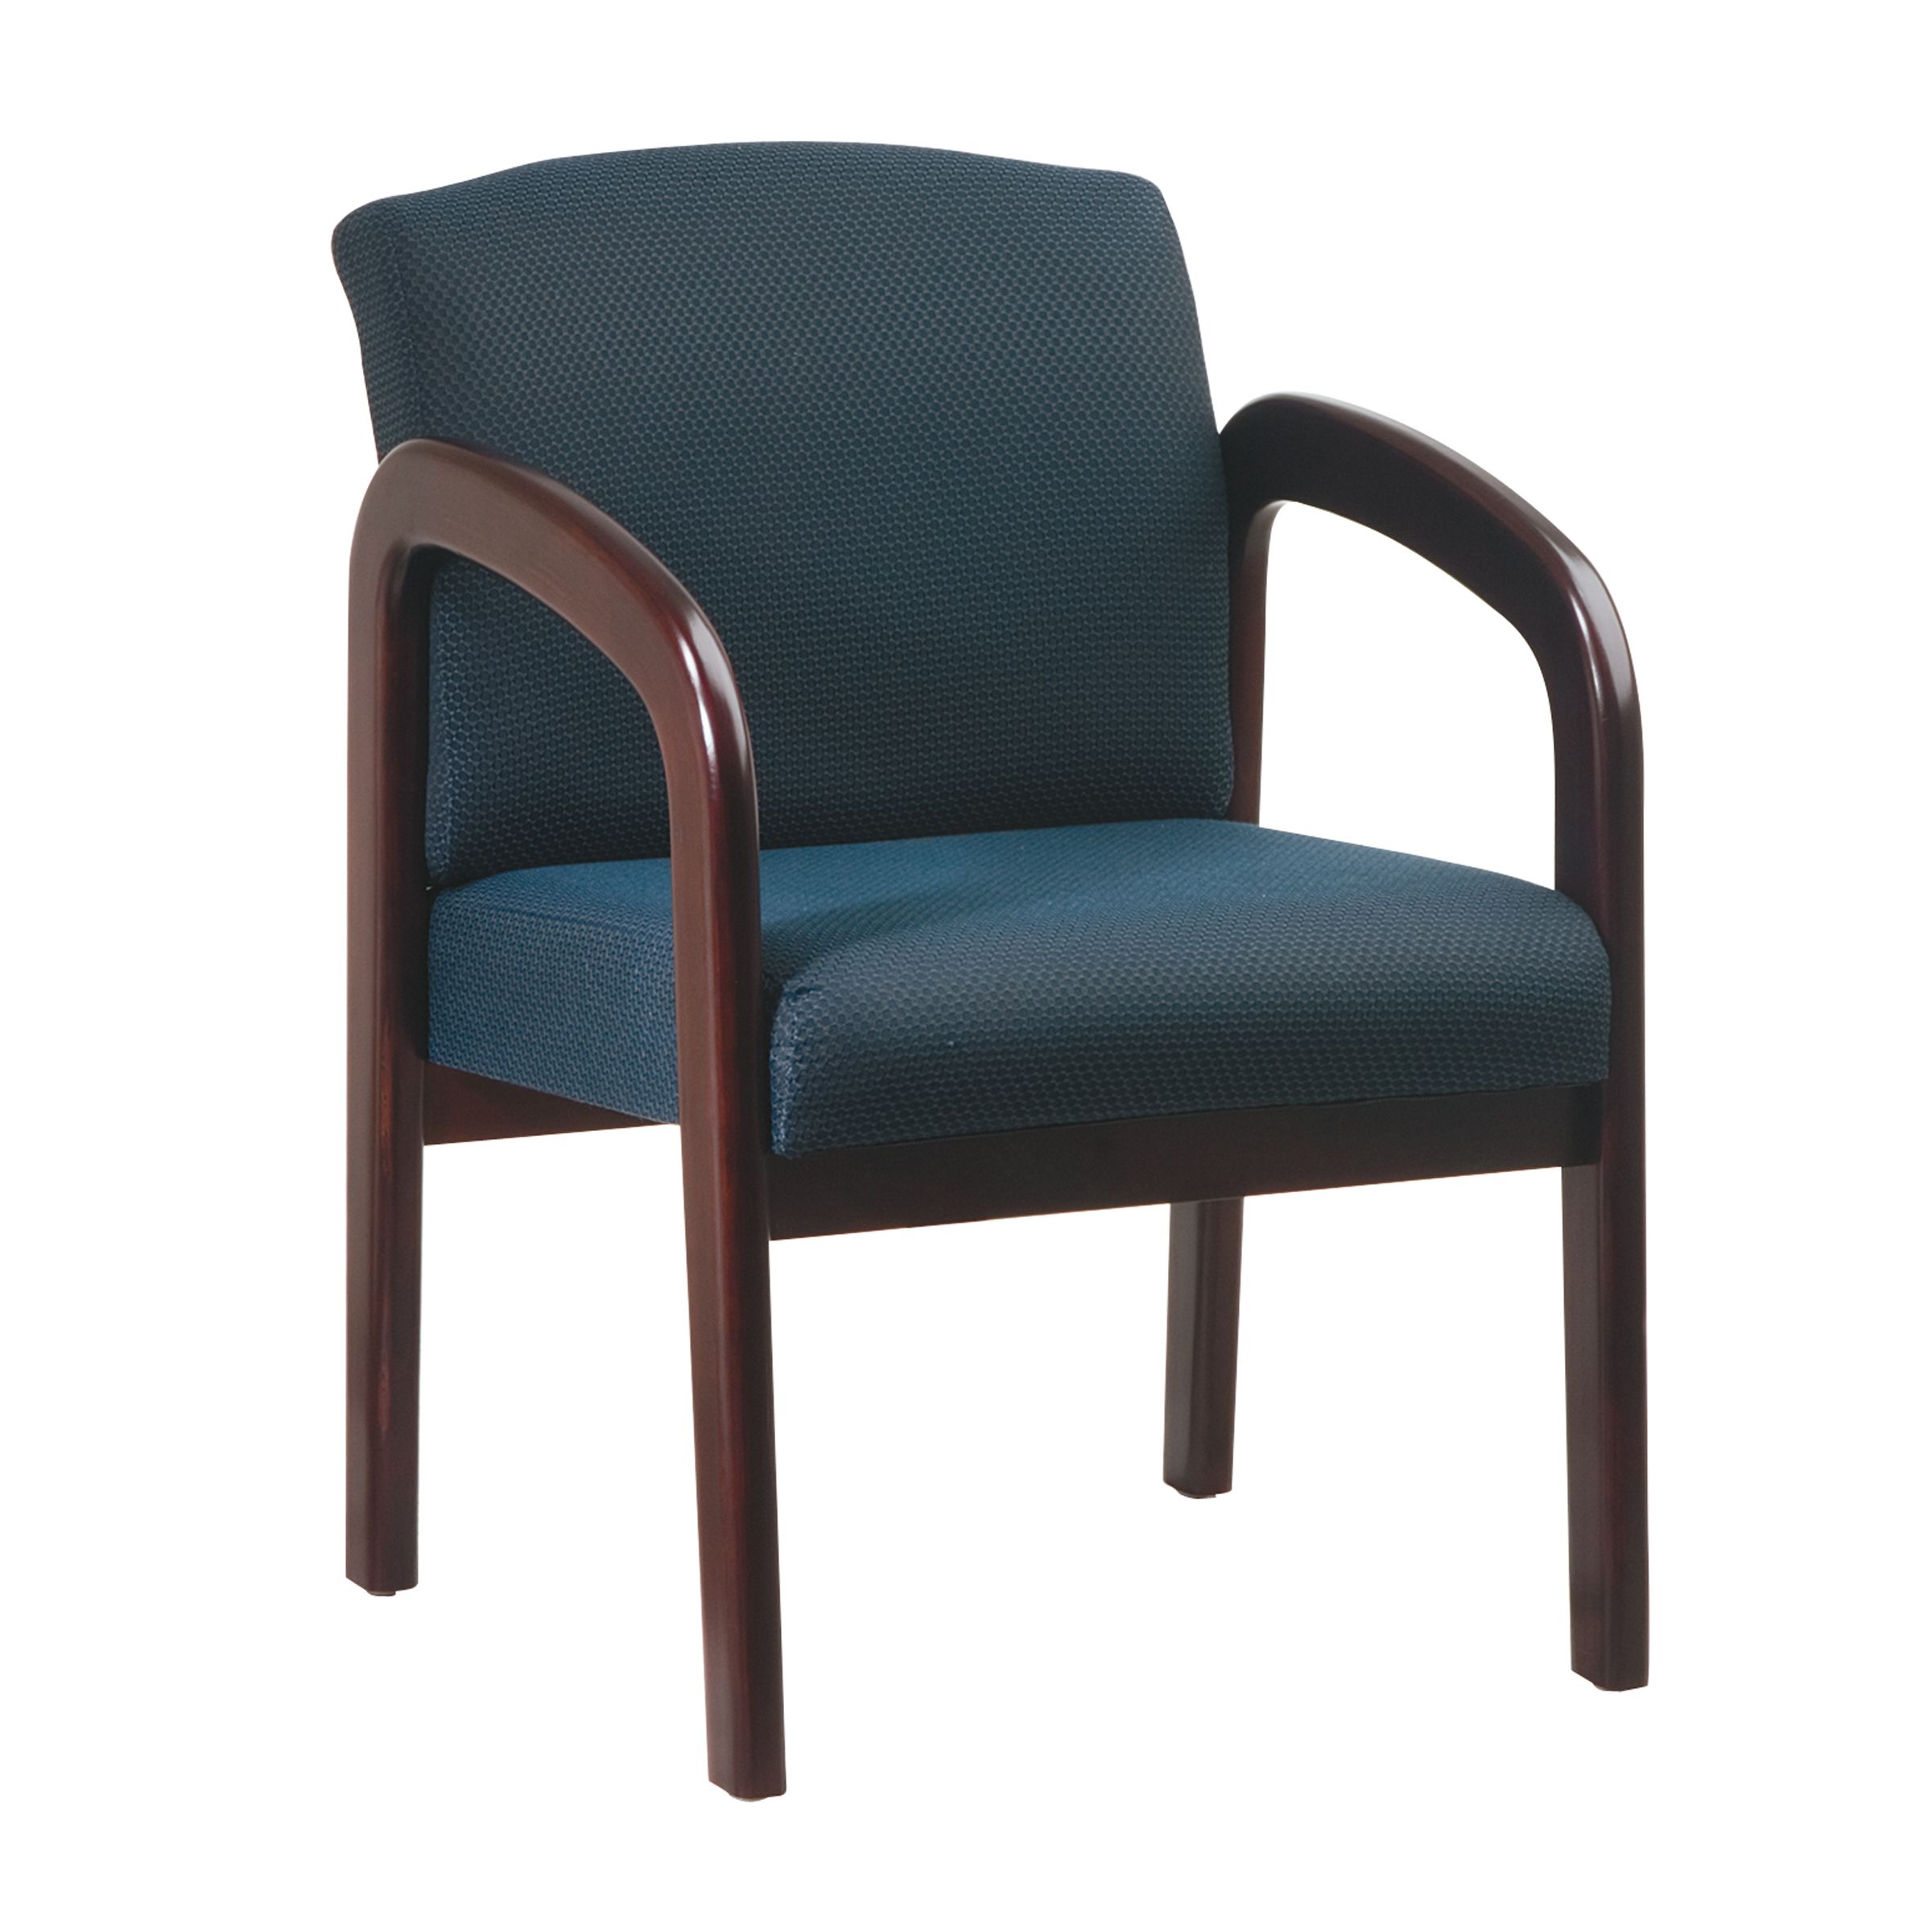 Office Star Mahogany Wood Visitors Chair - Midnight Blue Fabric